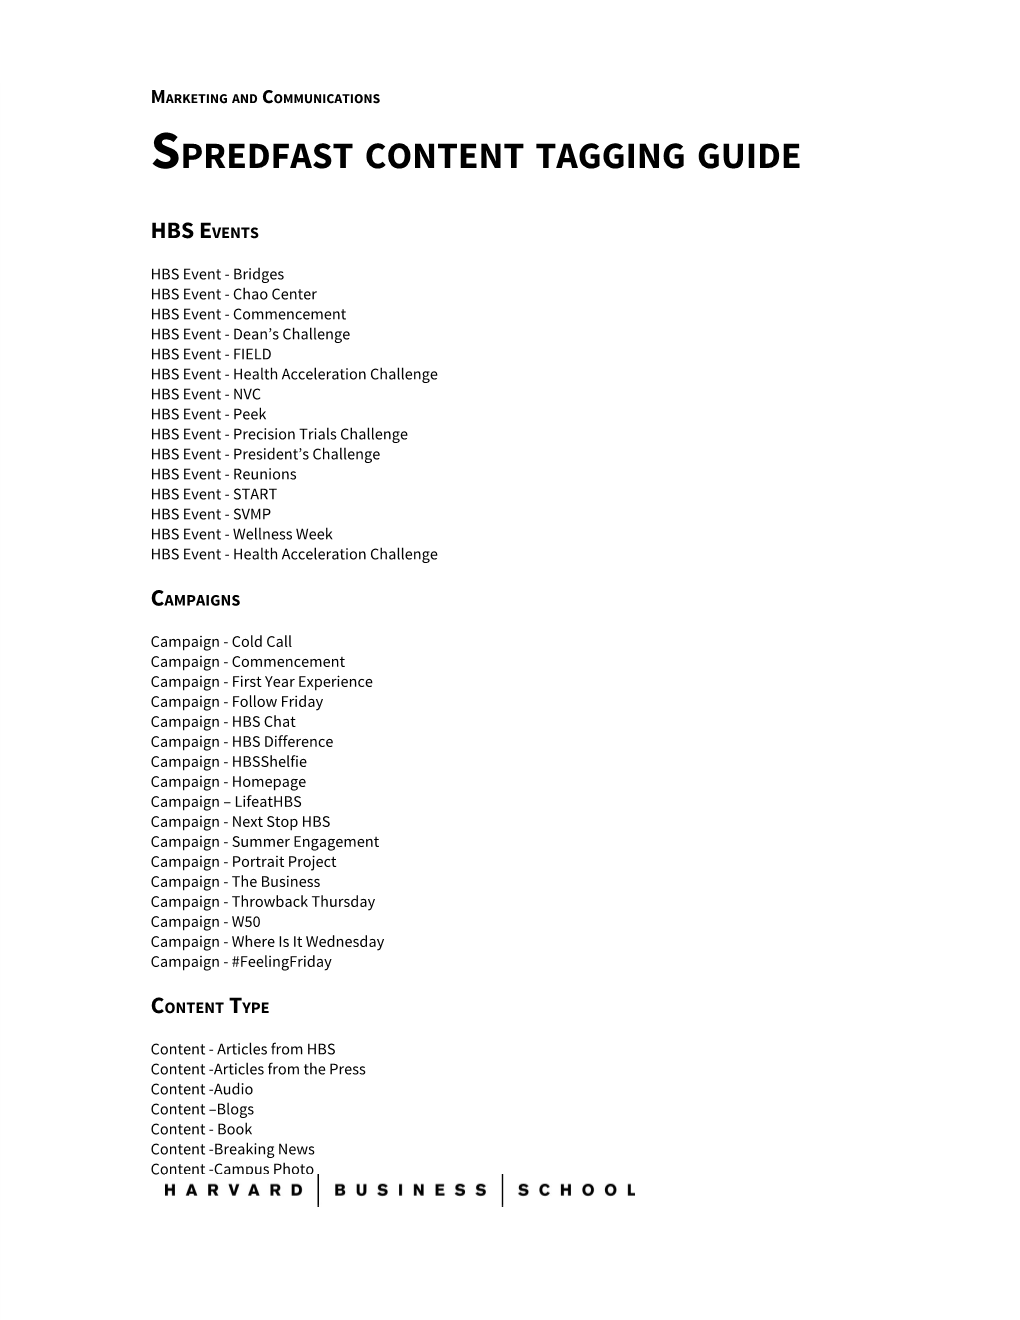 Spredfast Content Tagging Guide